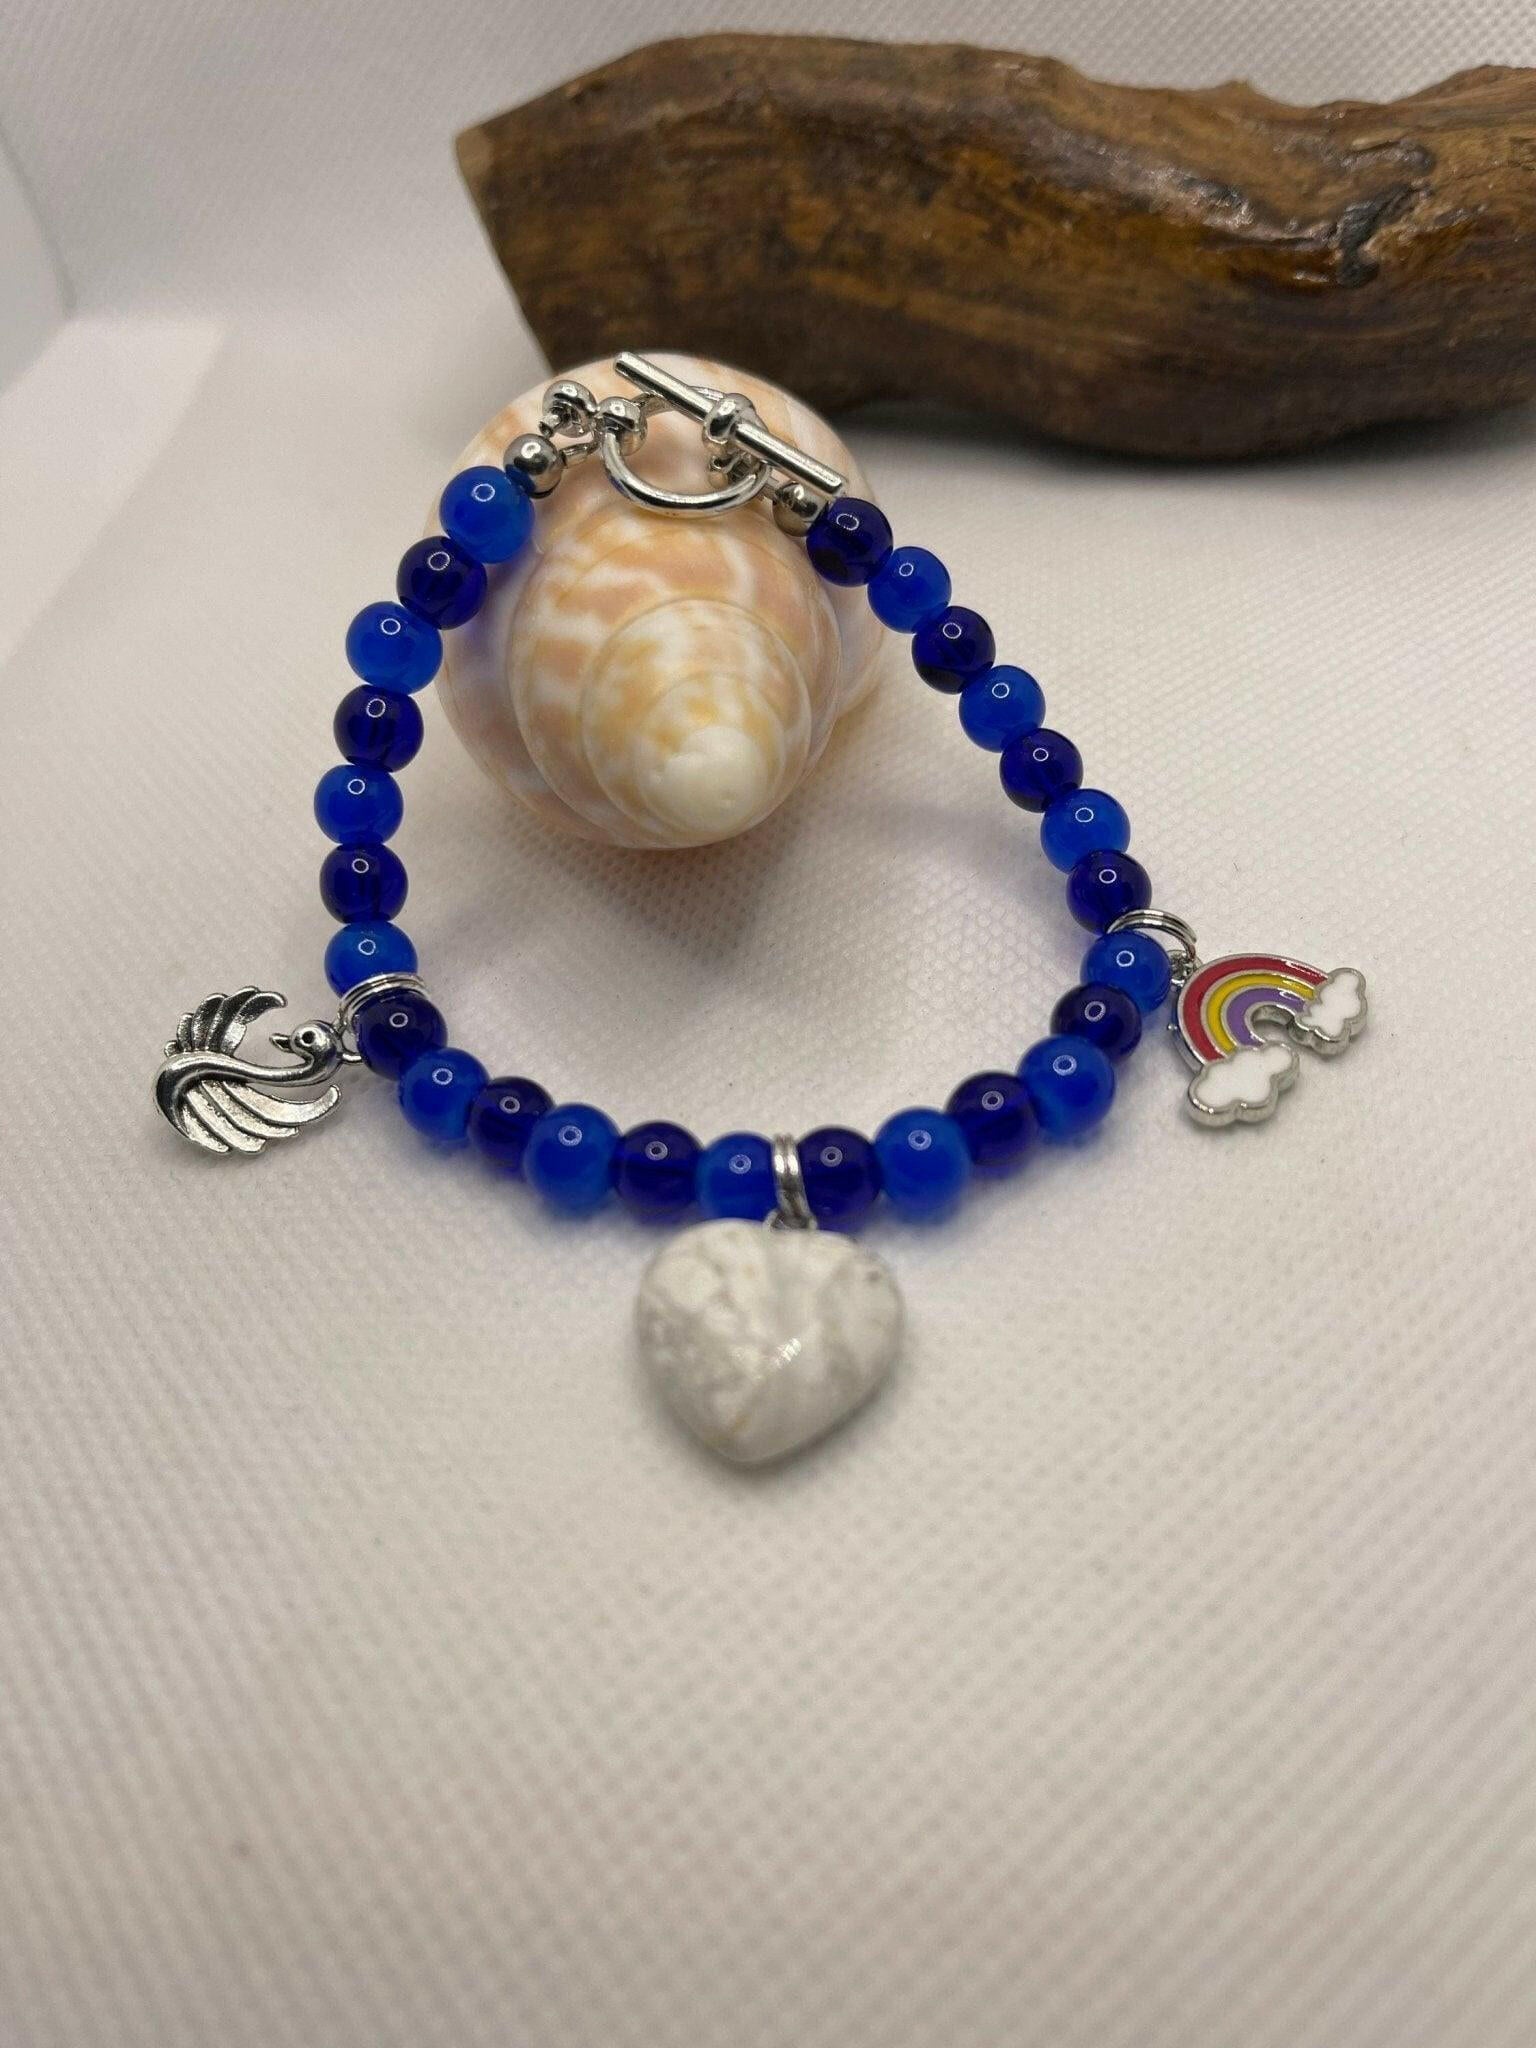 Heart Charm Bracelet | Blue Handmade Bracelet | Bec Sue Jewelry Shop